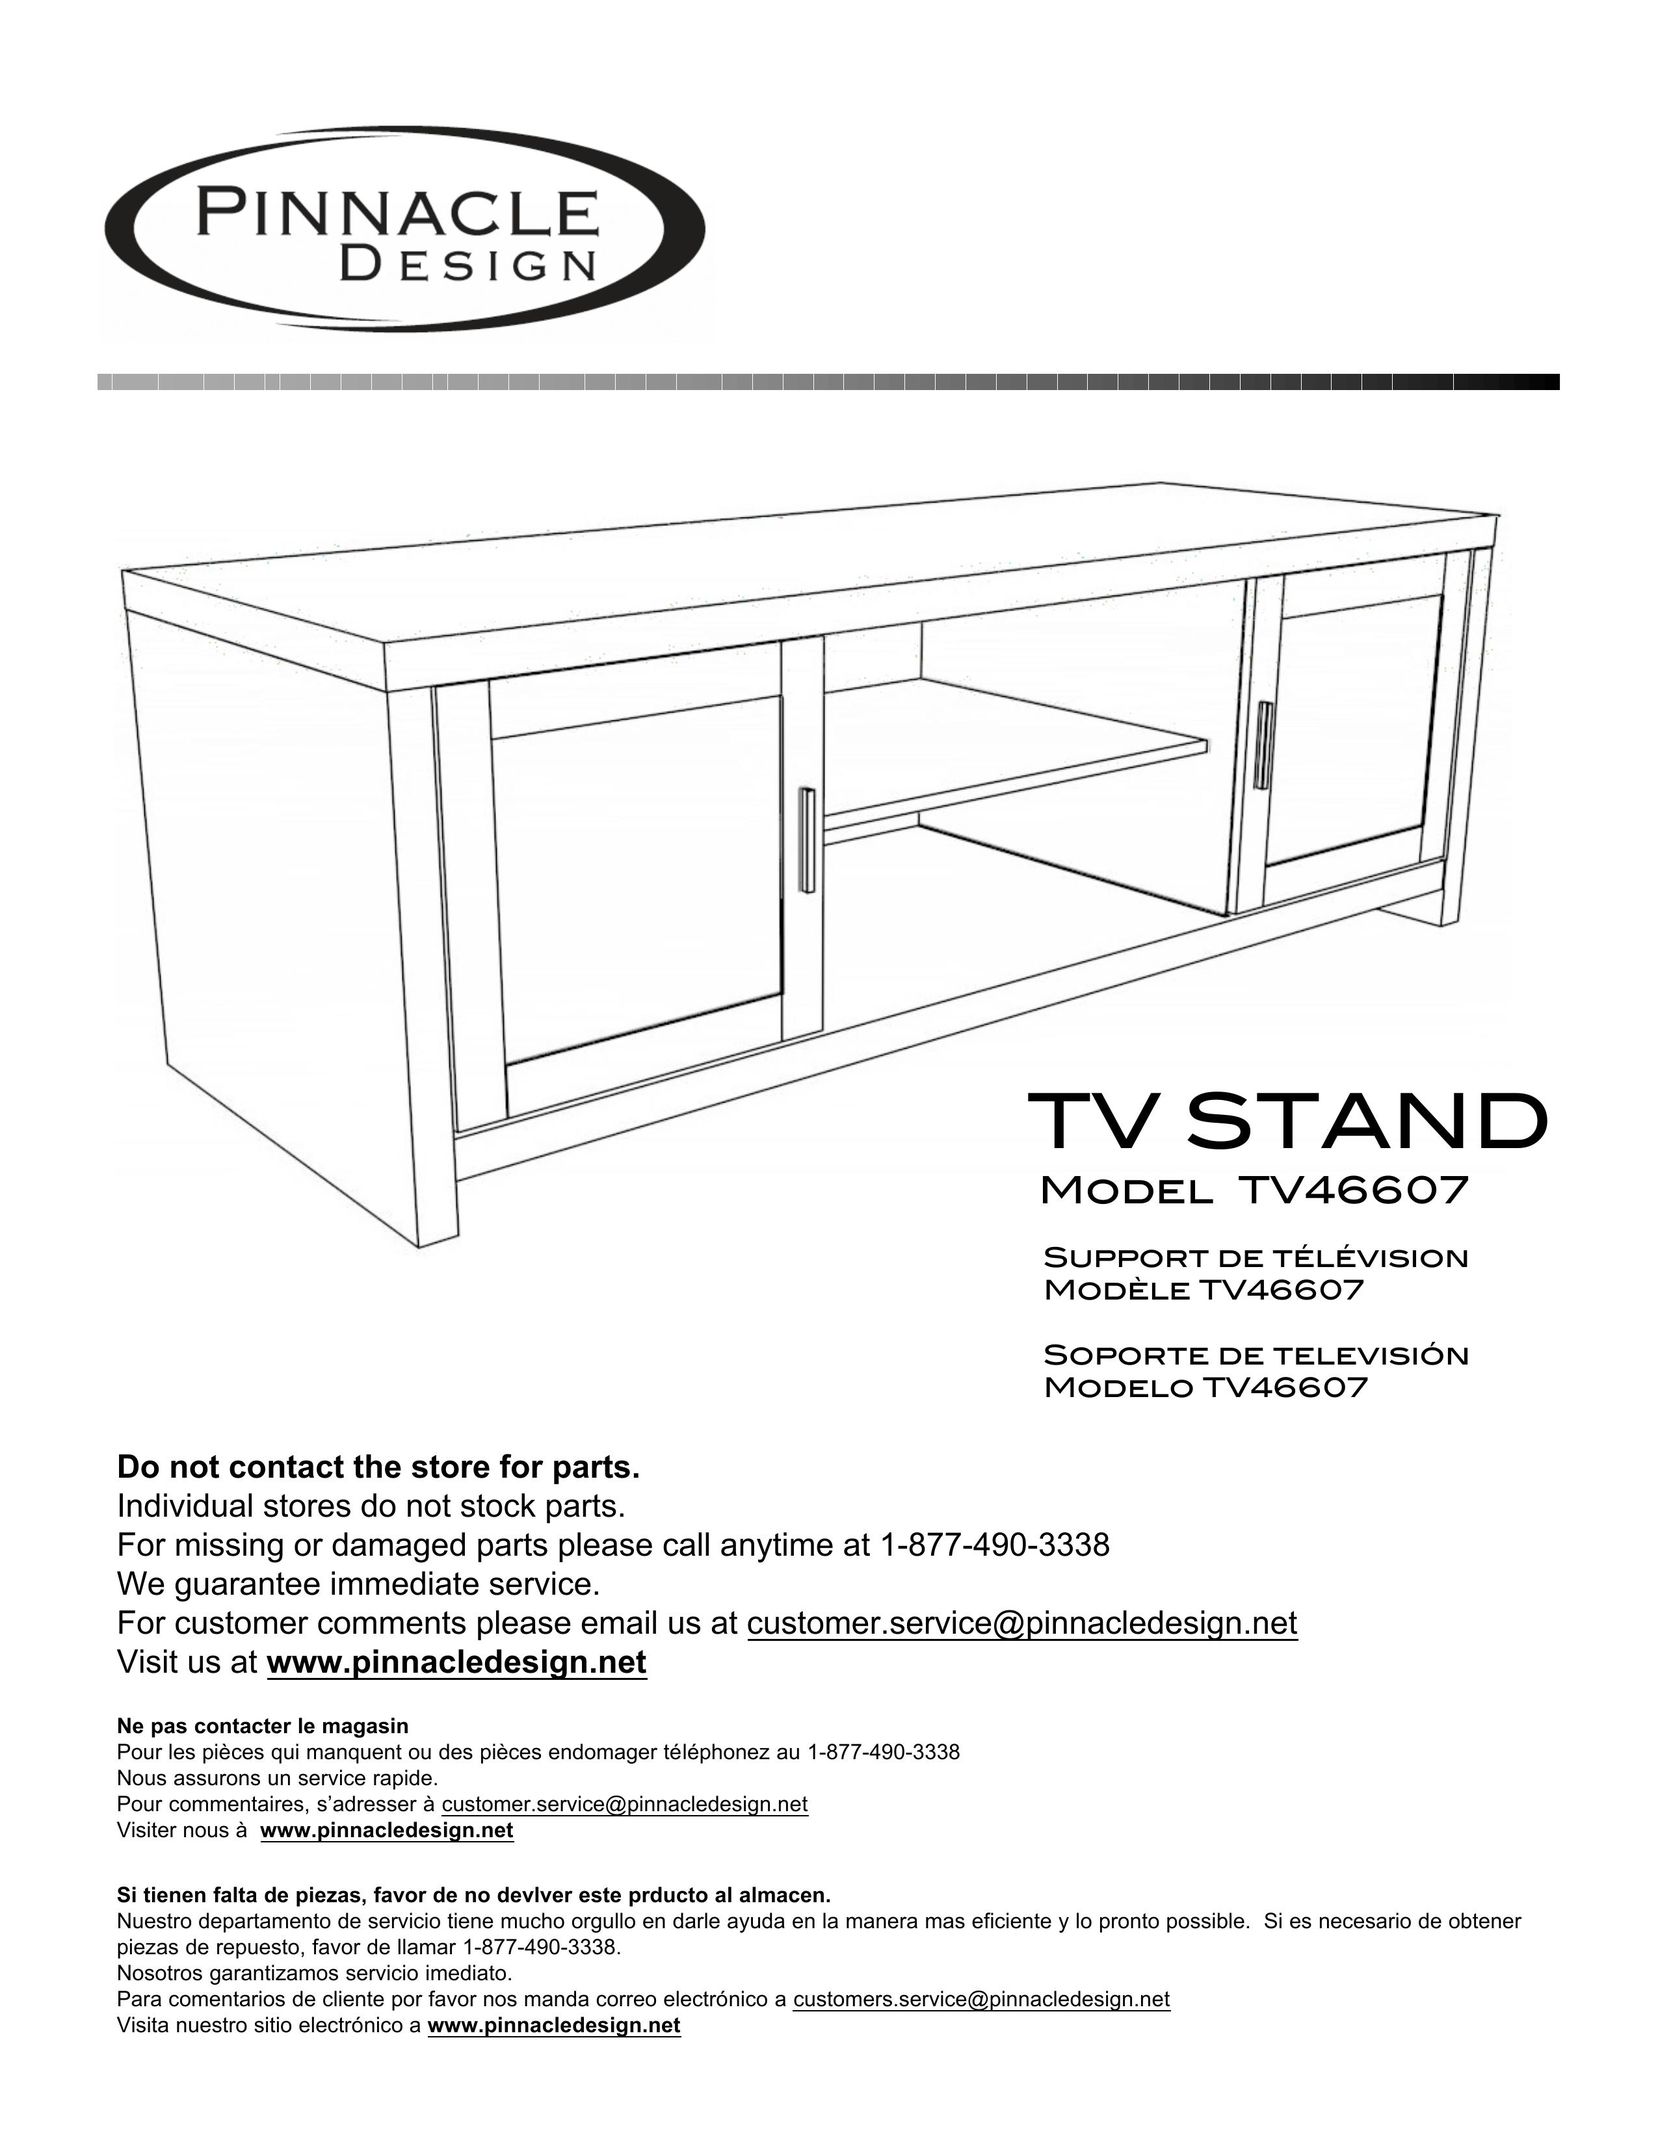 Pinnacle Design TV46607 TV Video Accessories User Manual